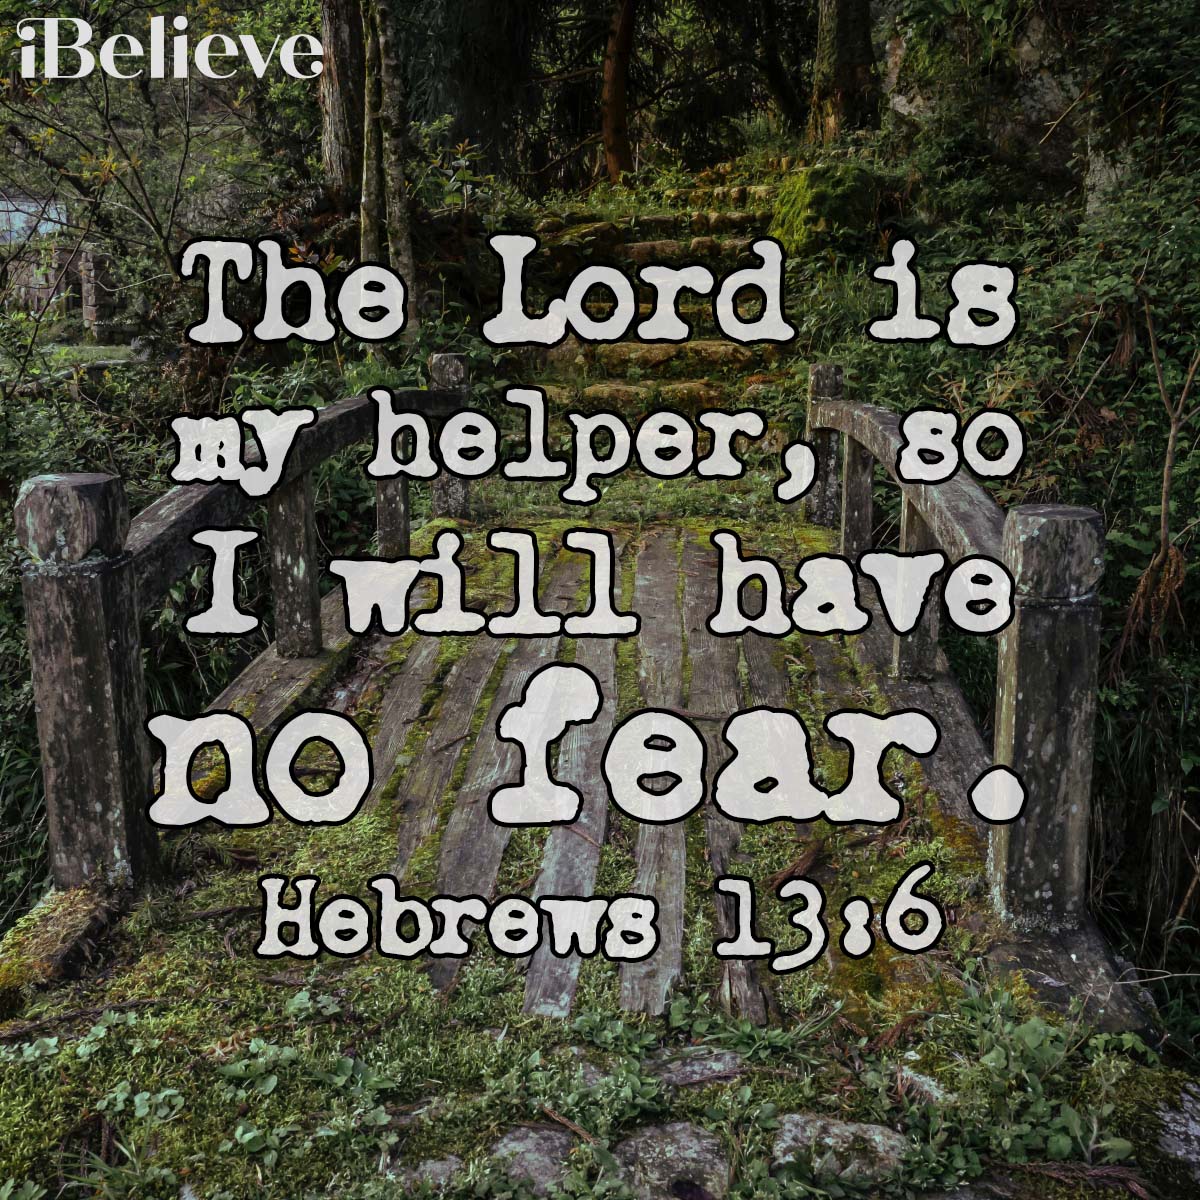 Hebrews 13:6, inspirational image